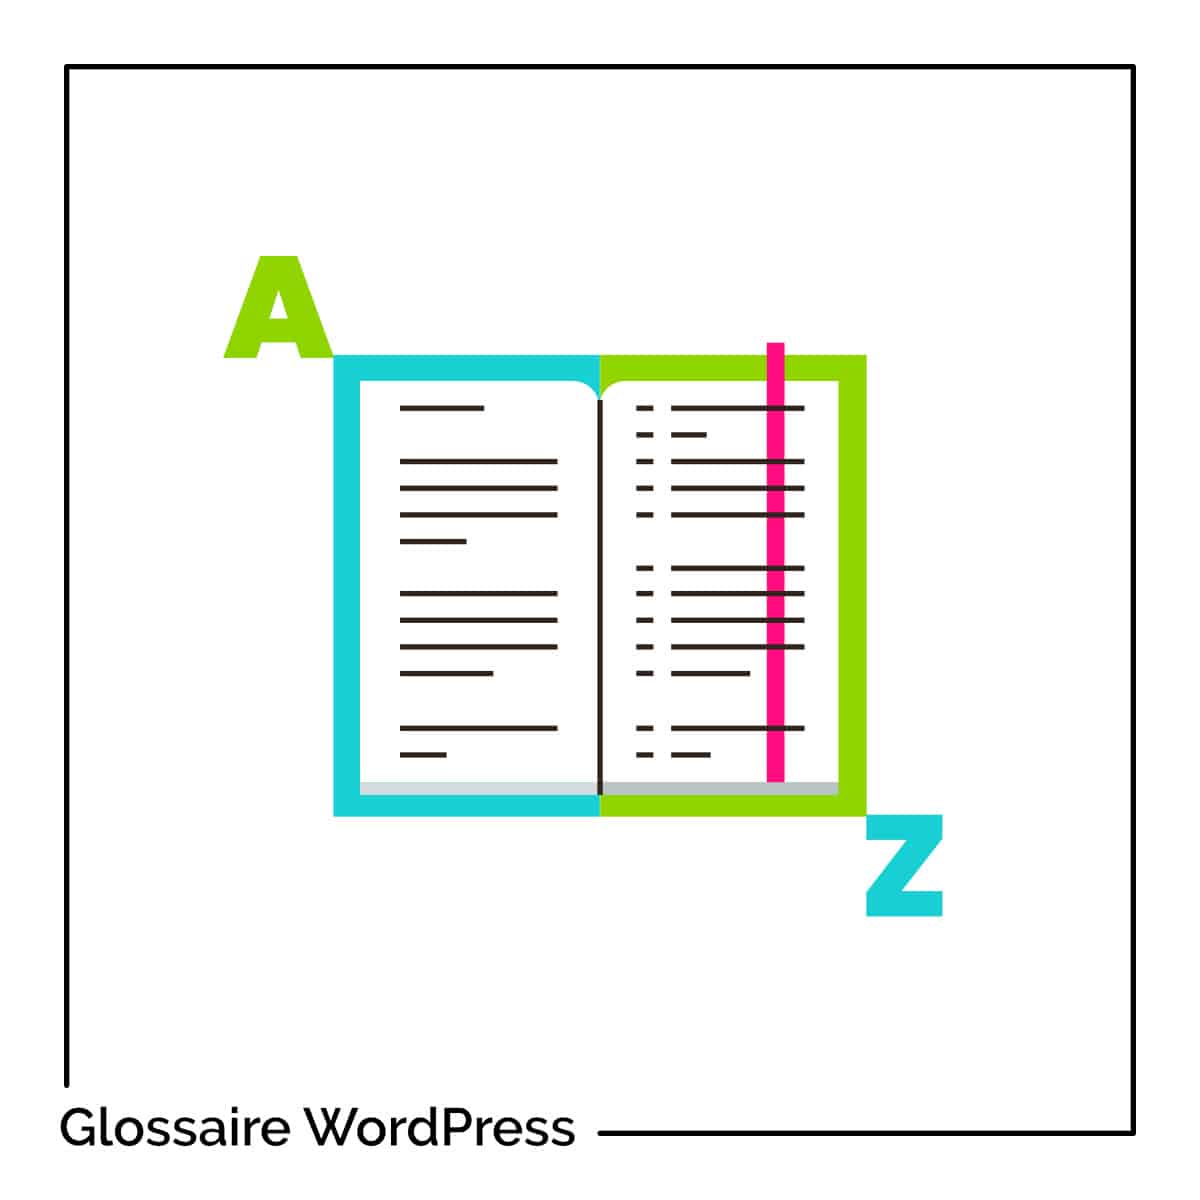 Glossaire WordPress de A à Z